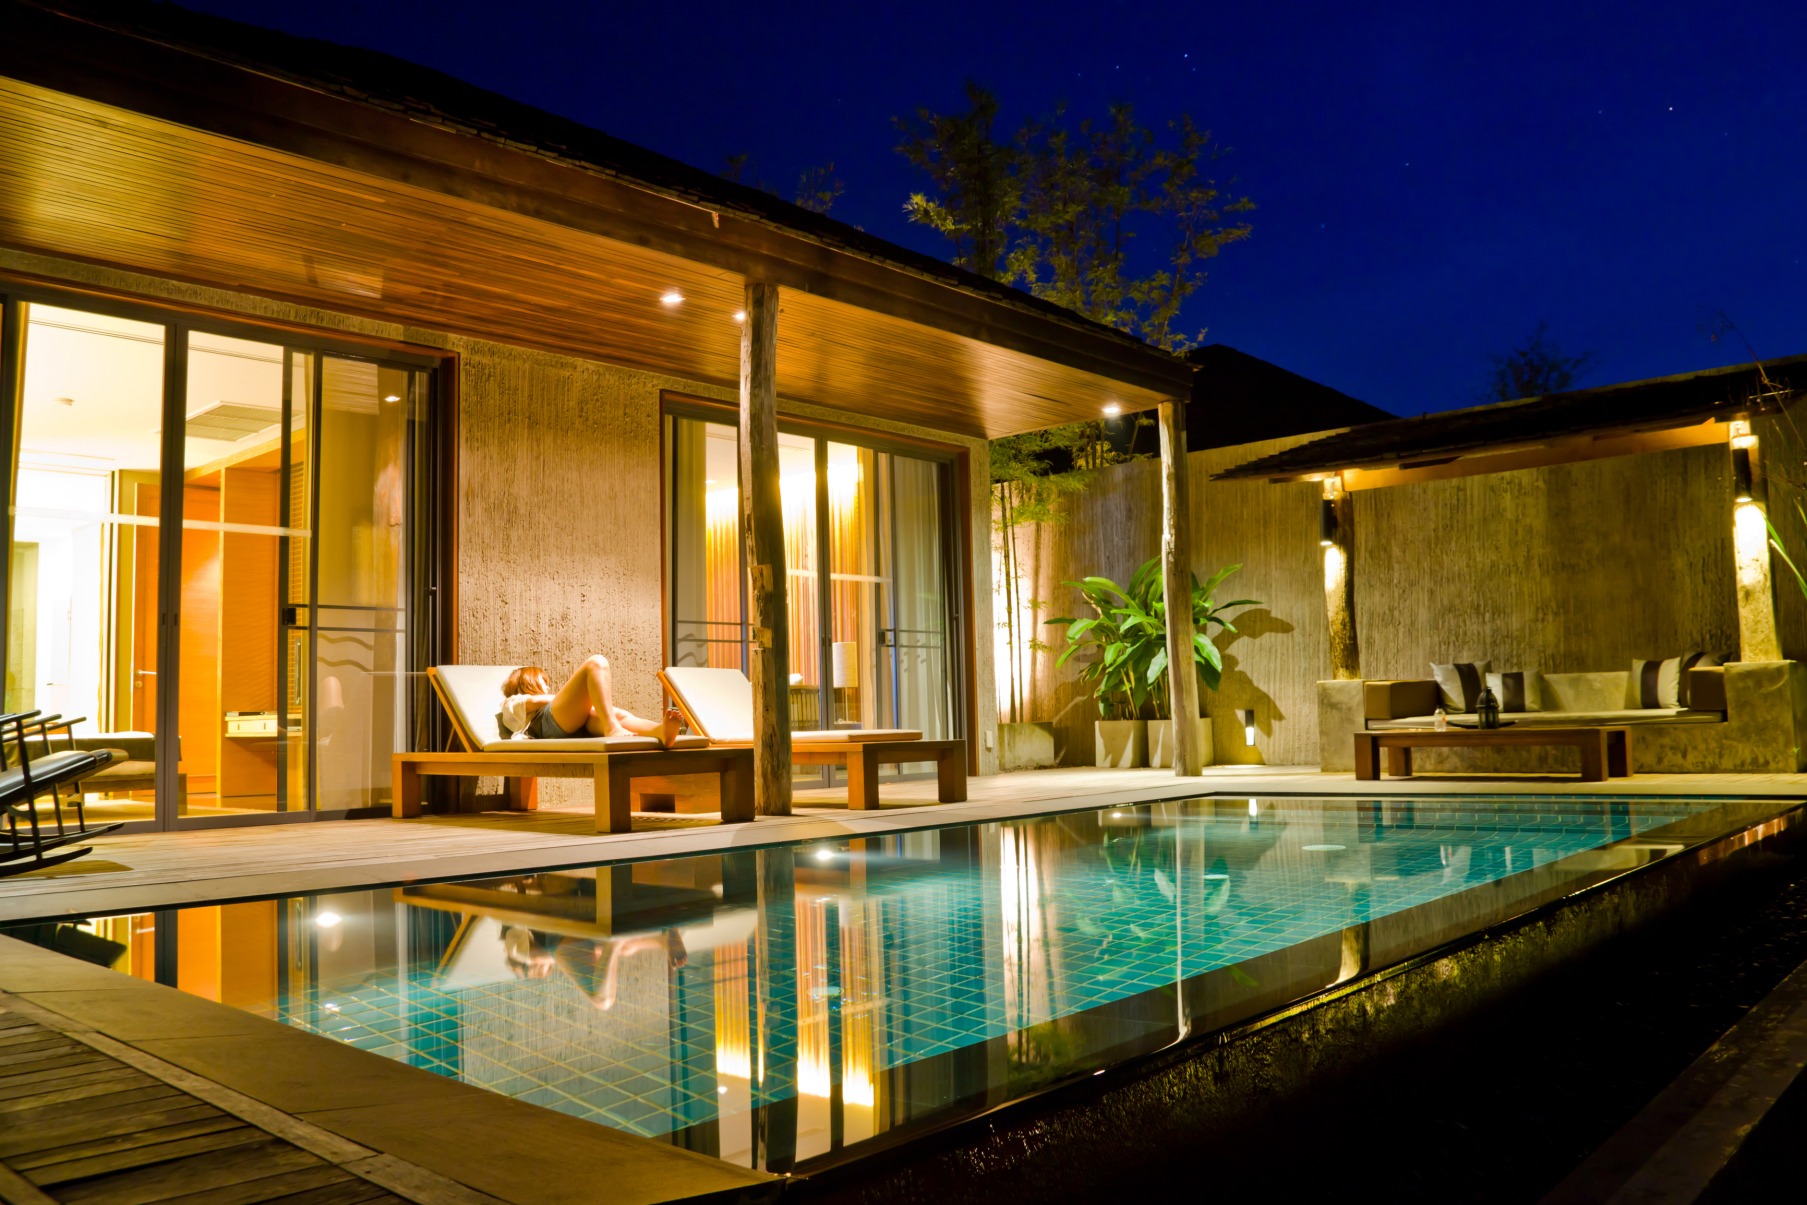 Pool Home - Modern.jpg